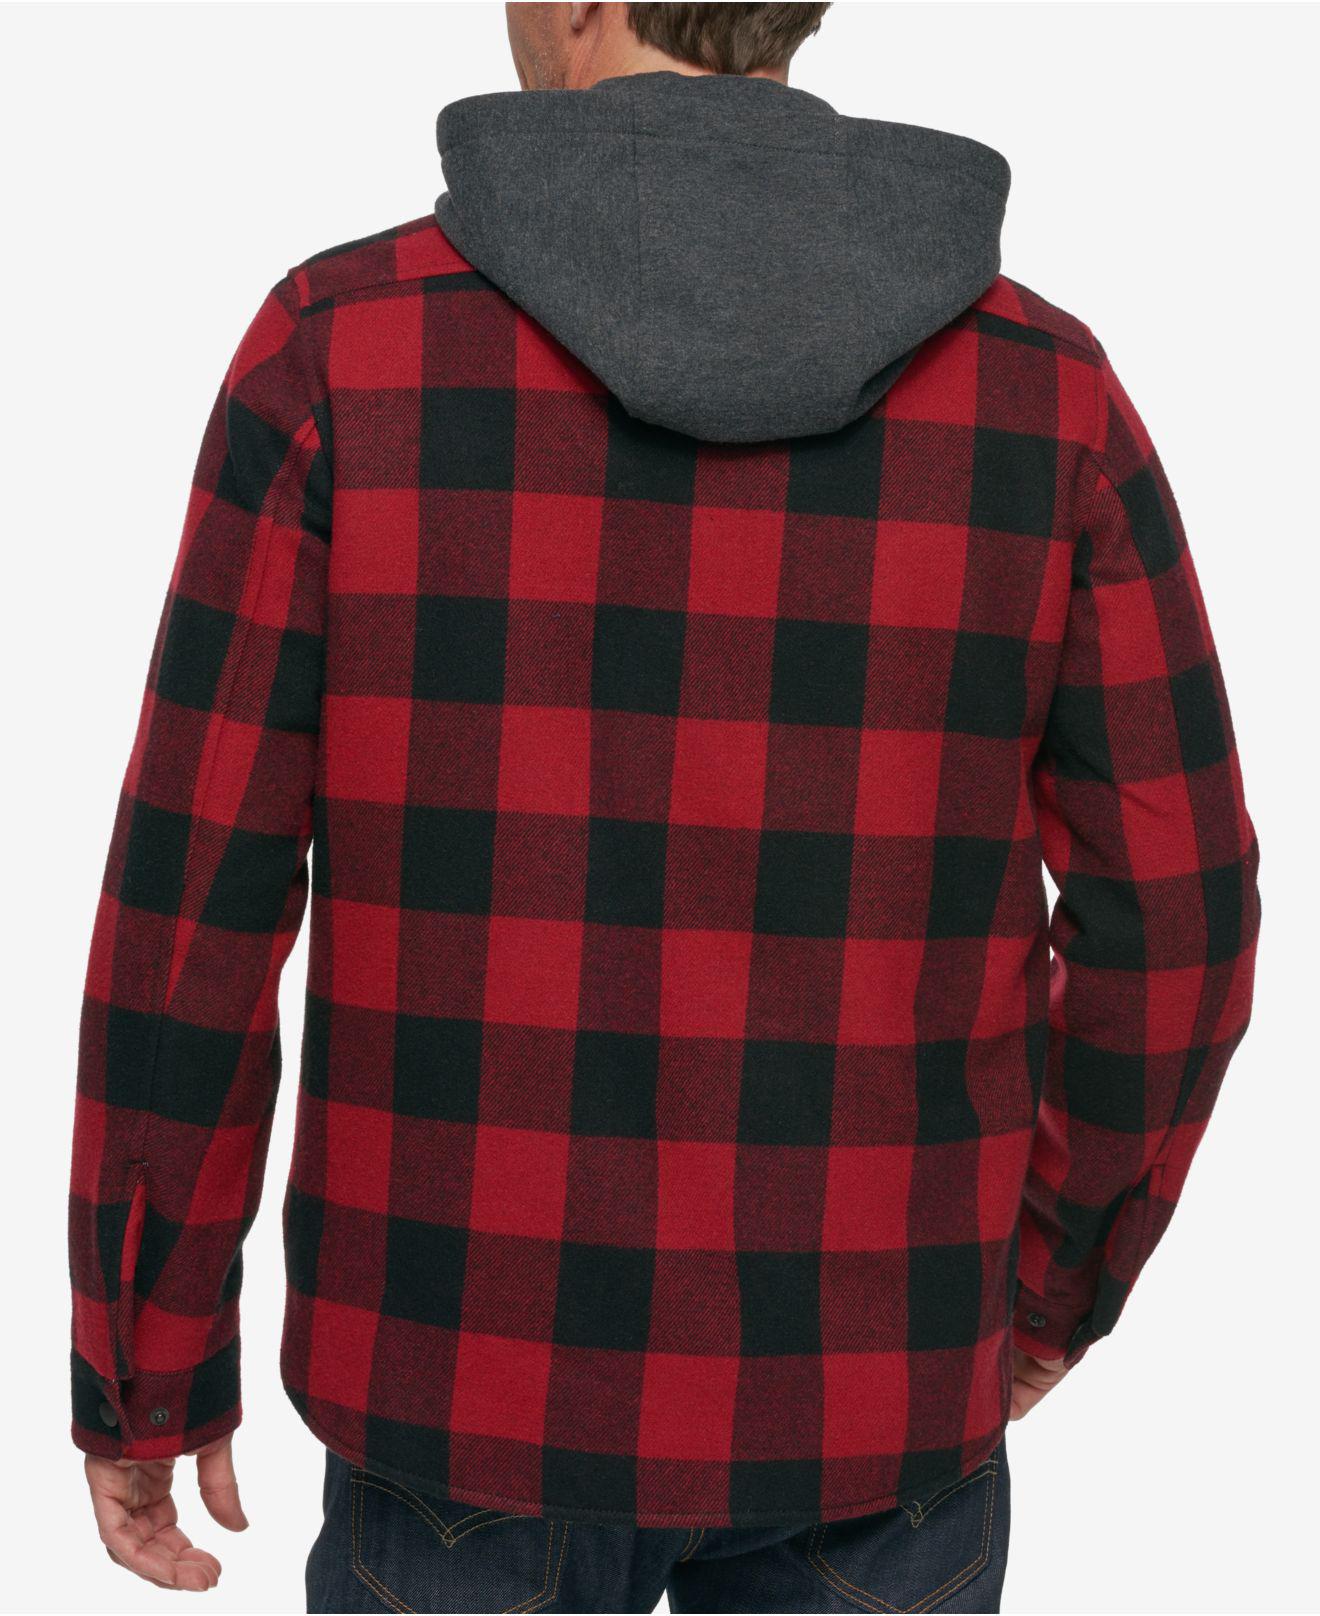 Download G.H.BASS Fleece Men's Buffalo Plaid Hooded Shirt Jacket in ...